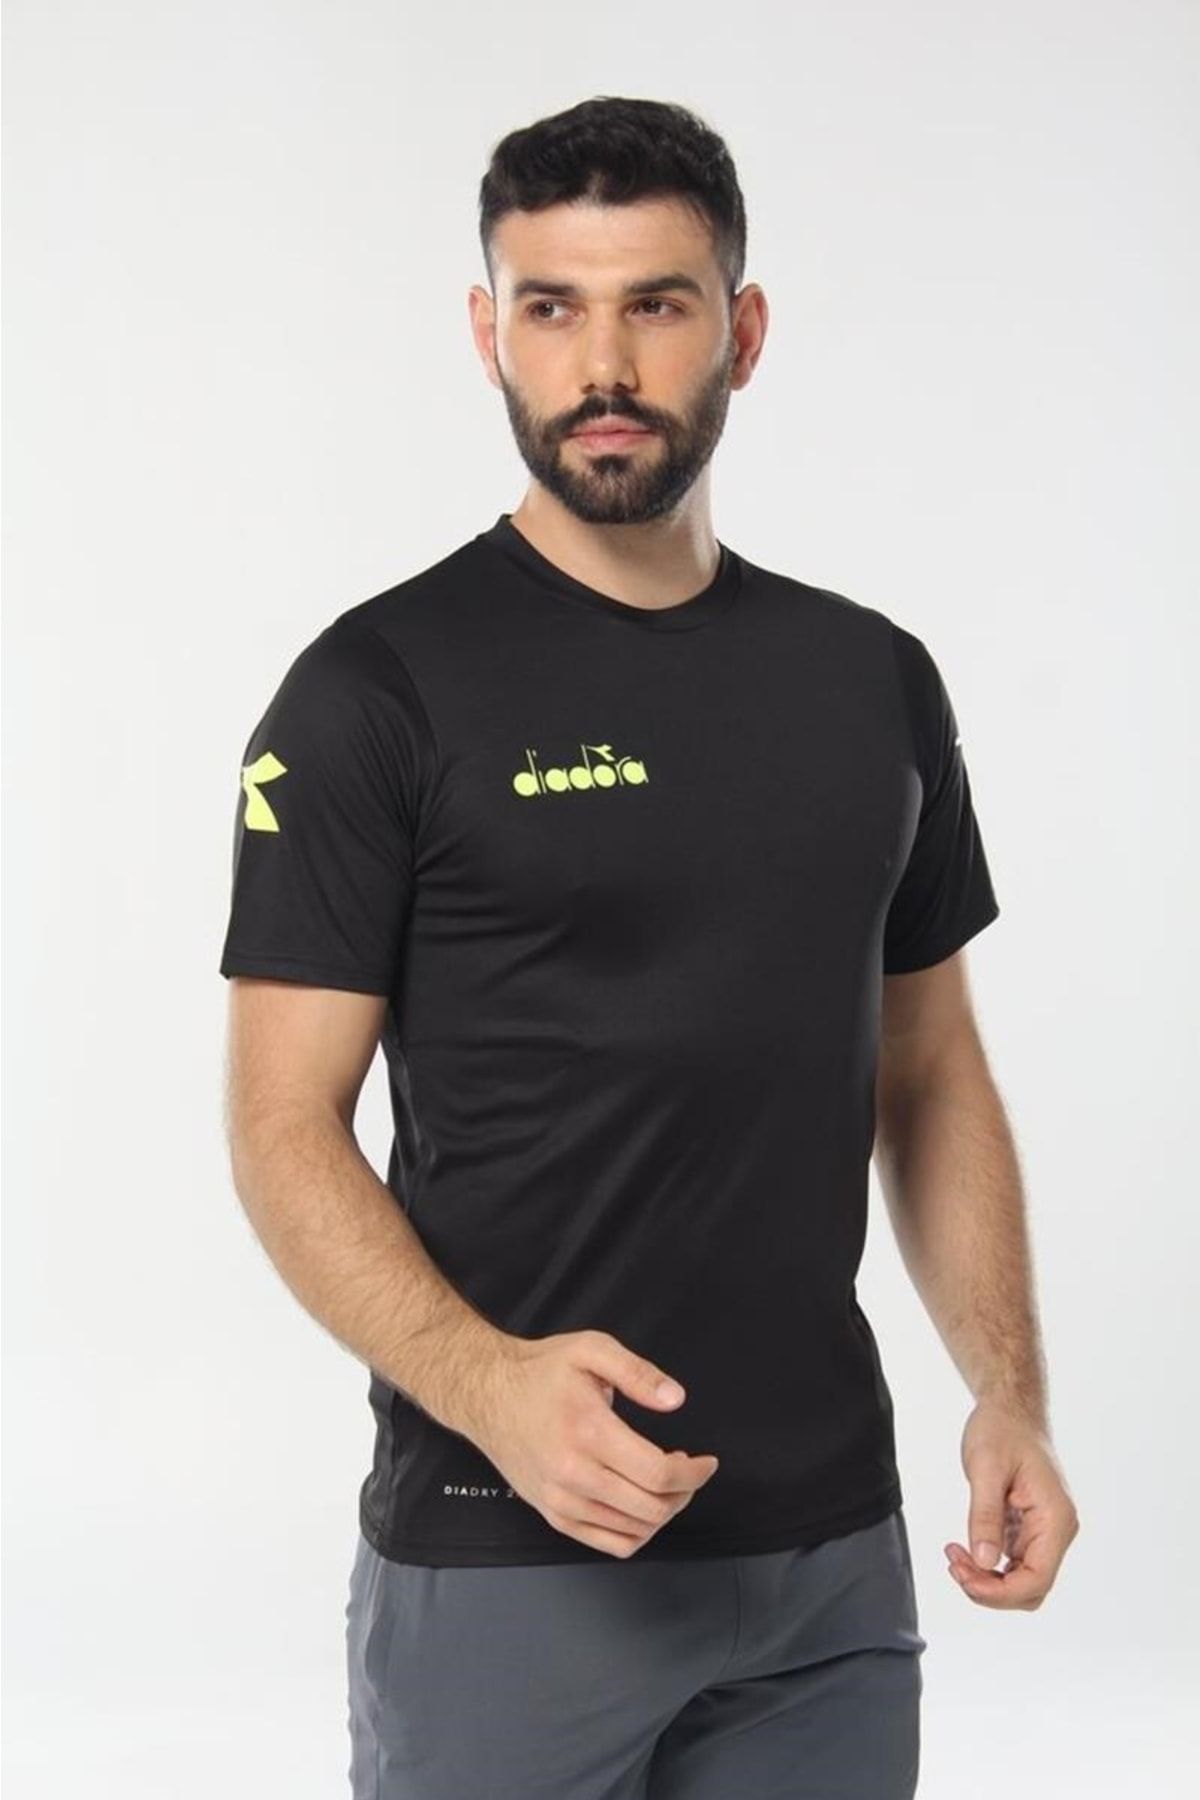 Diadora Nacce Erkek Siyah T-shirt - 16tsr05